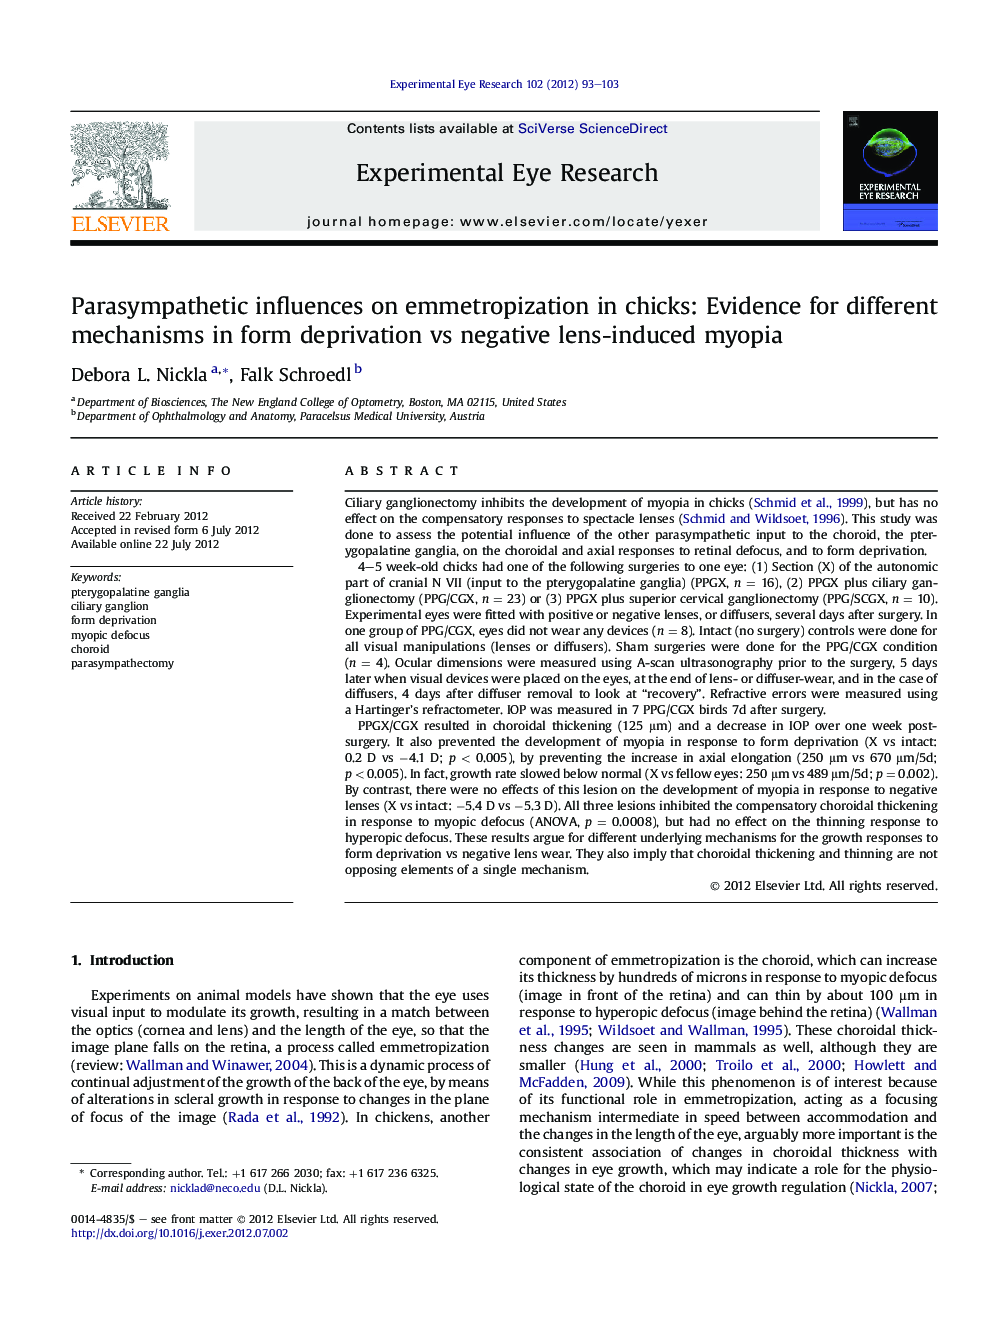 Parasympathetic influences on emmetropization in chicks: Evidence for different mechanisms in form deprivation vs negative lens-induced myopia